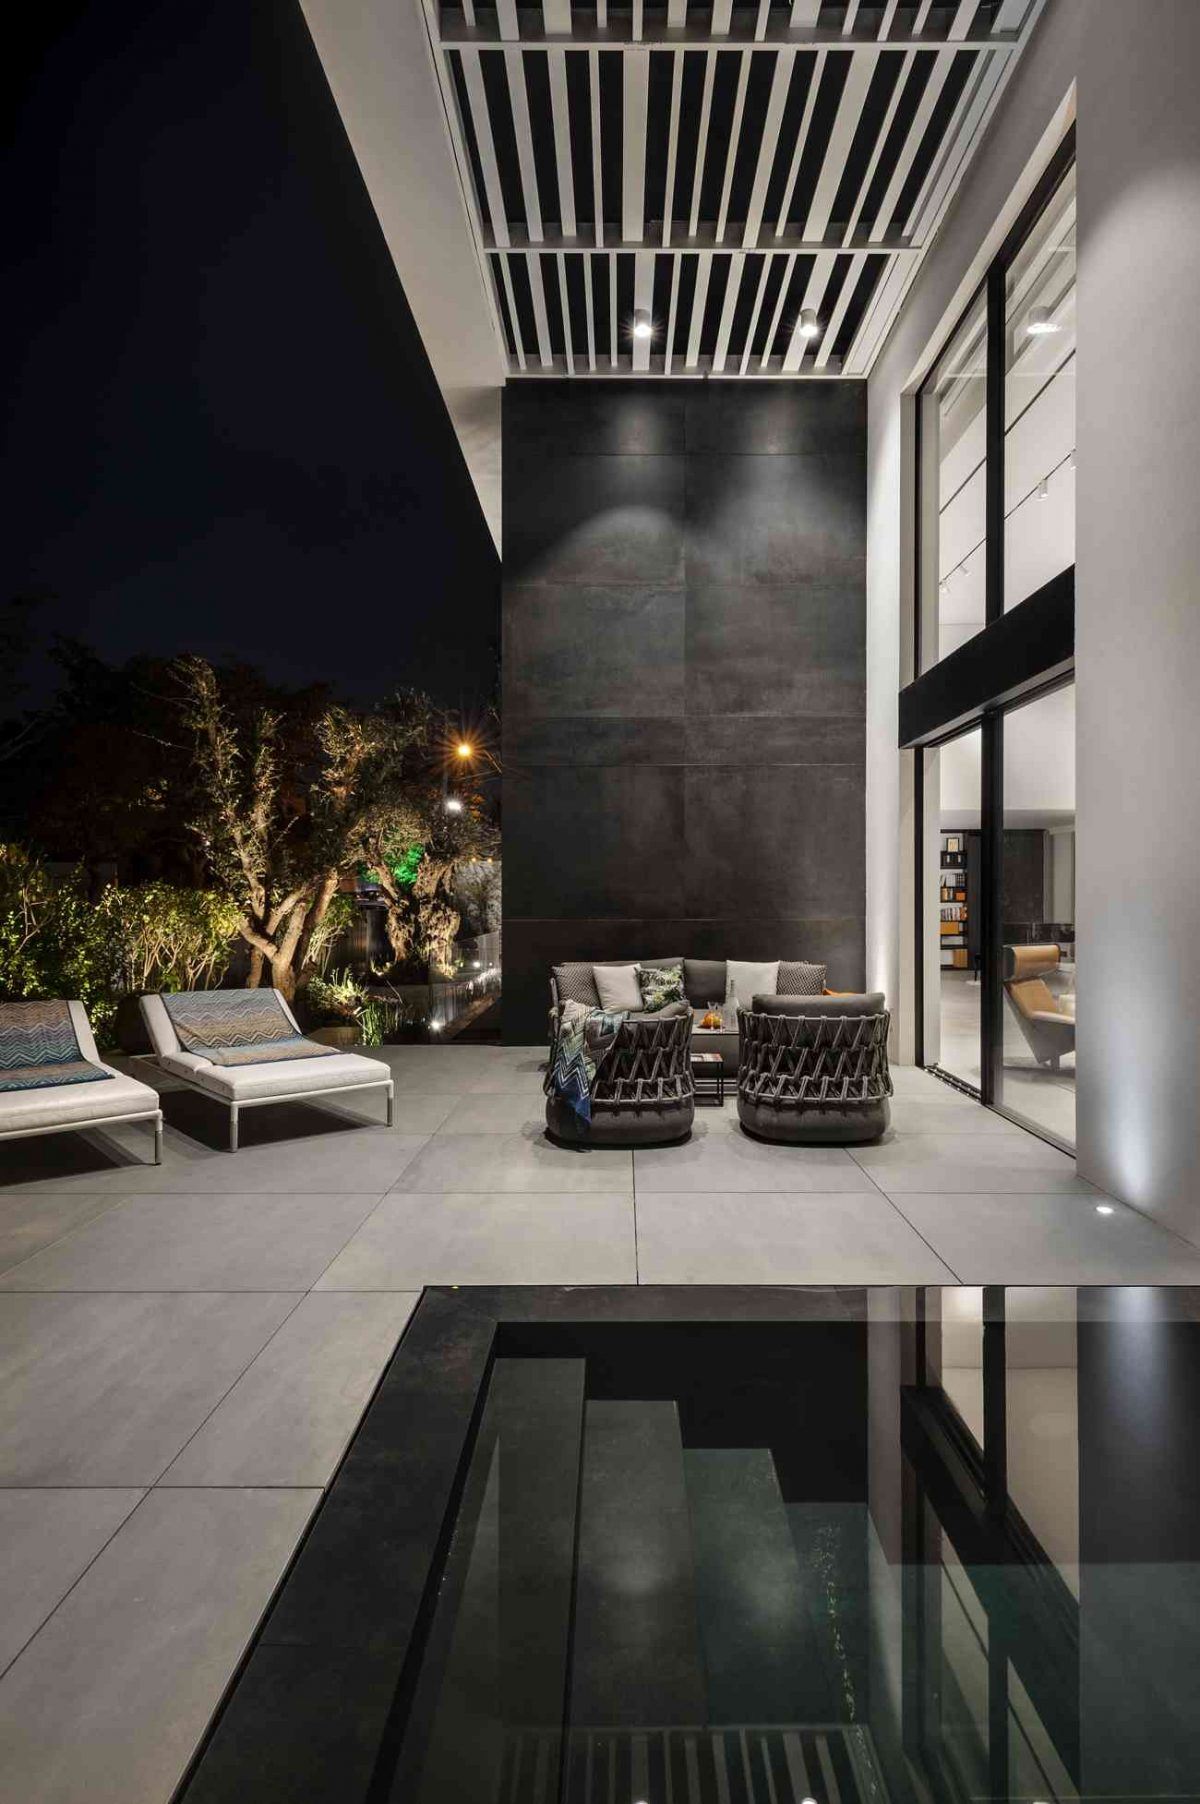 Simoene Architects Ltd – Central Israel תאורה פרגולה מיוחדת על ידי קמחי דורי 